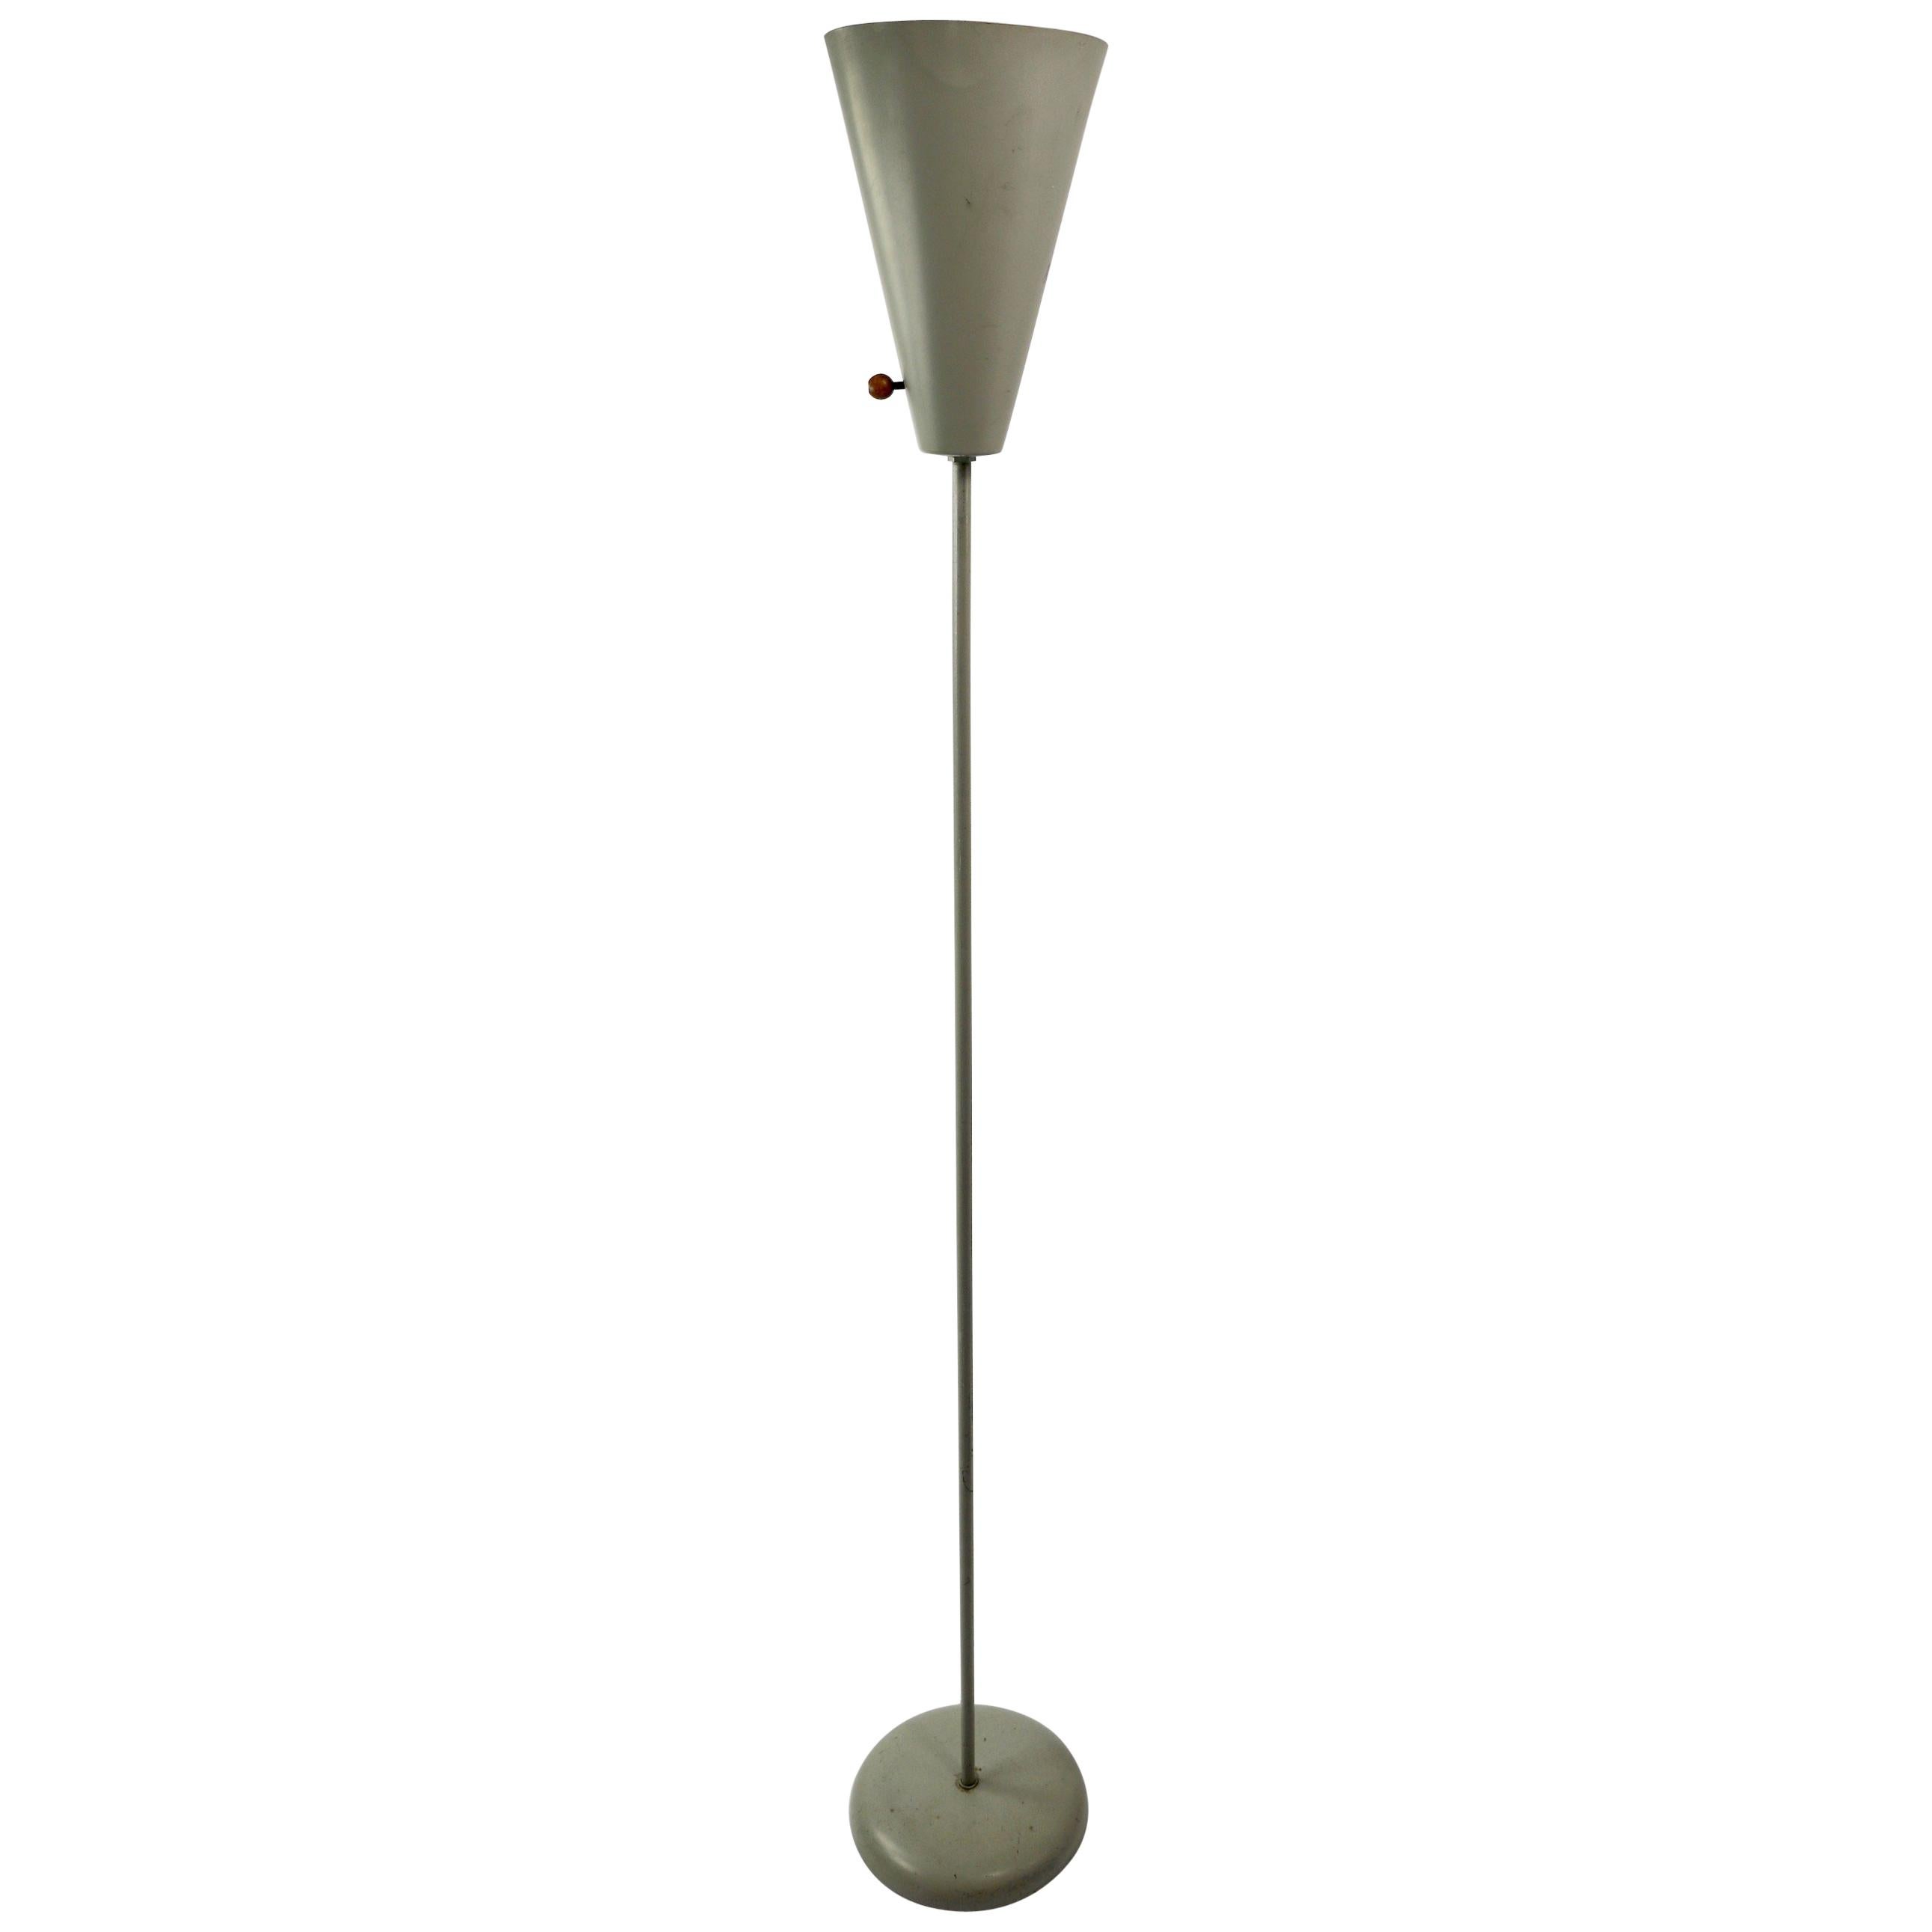 David Wurster for Raymor Aluminum Torchiere Floor Lamp